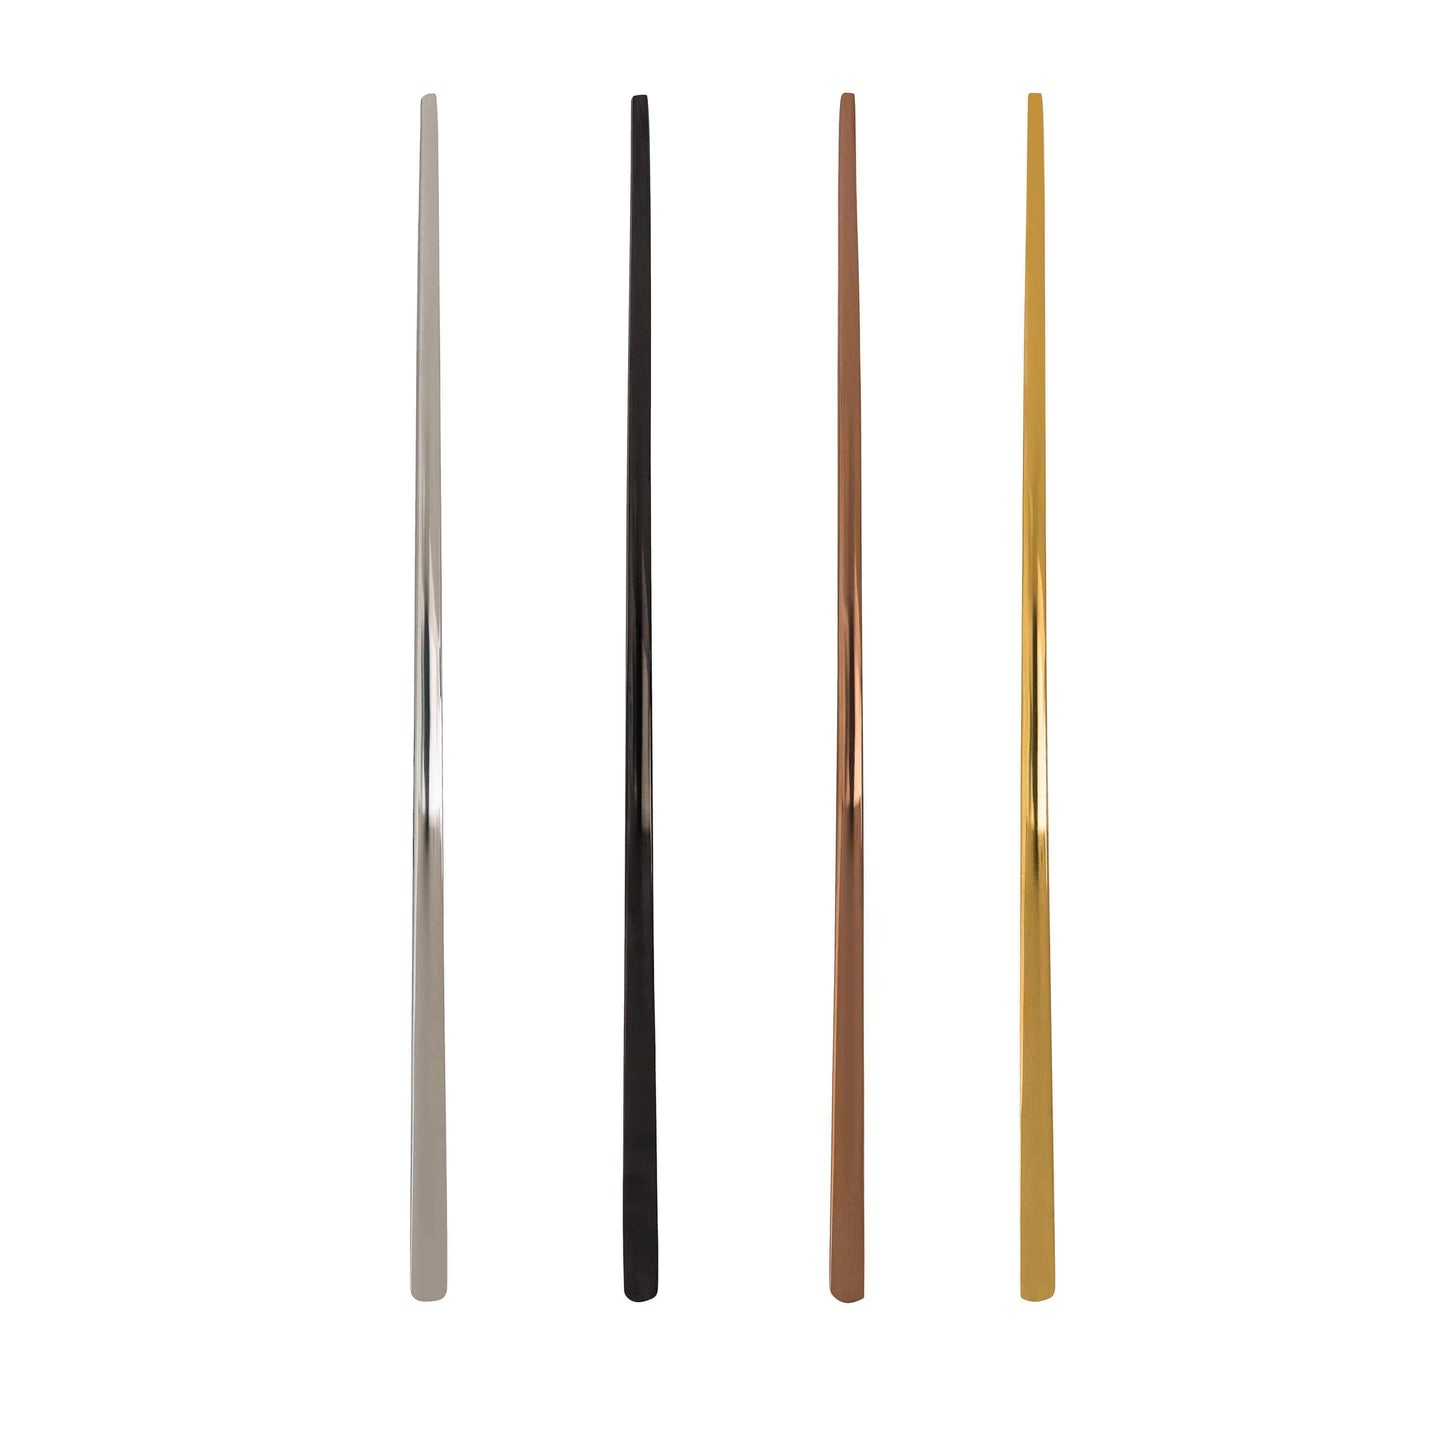 Shanghai Chopstick - Nordic Side - __tab1:handle-care, bis-hidden, chopsticks, dining, utensils